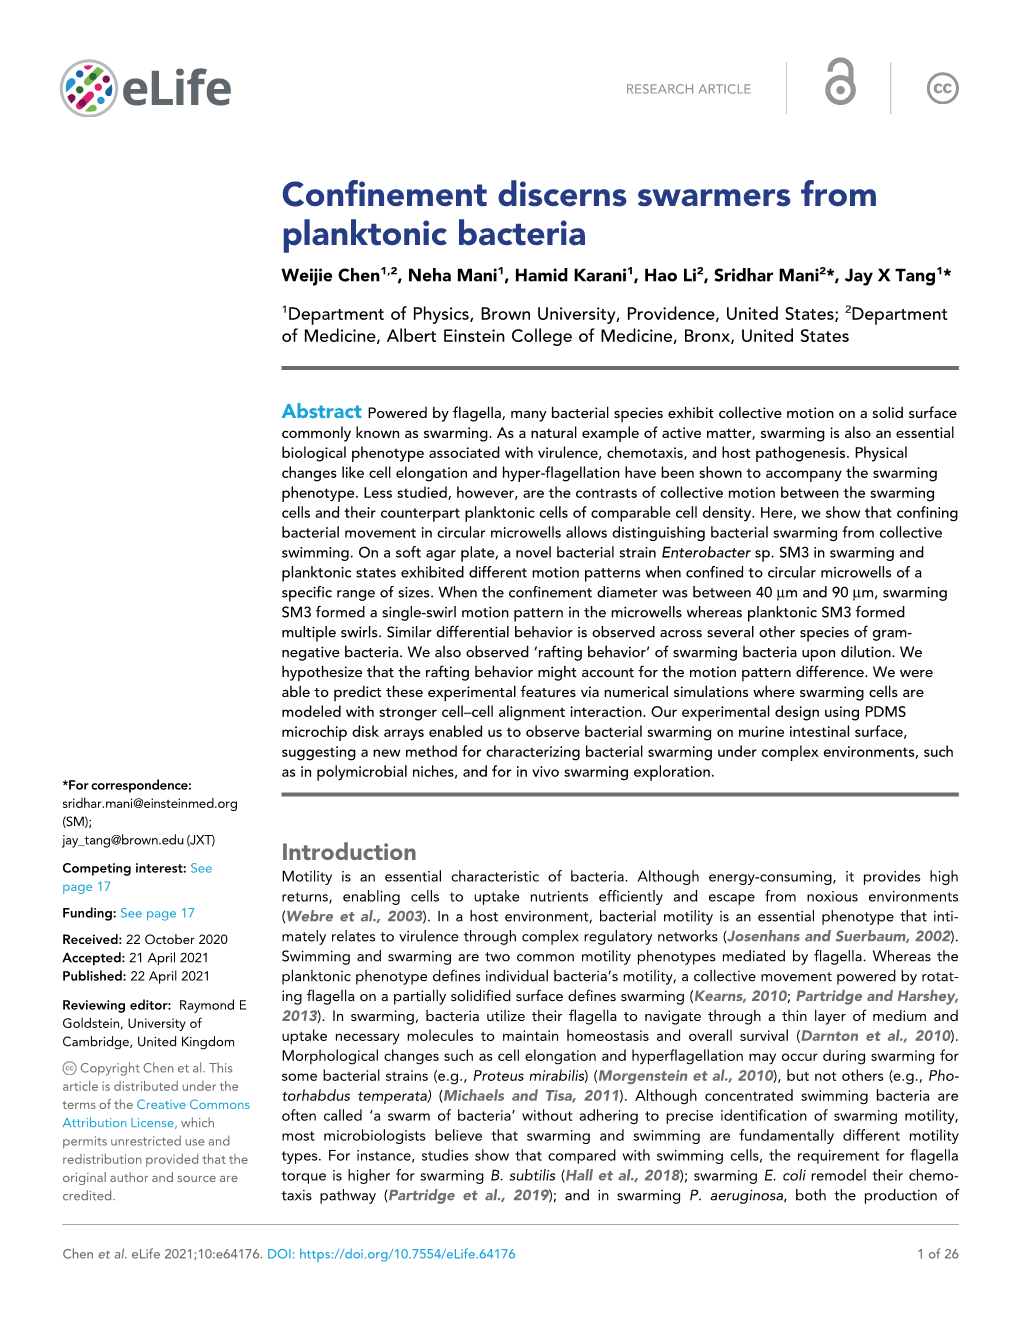 Confinement Discerns Swarmers from Planktonic Bacteria Weijie Chen1,2, Neha Mani1, Hamid Karani1, Hao Li2, Sridhar Mani2*, Jay X Tang1*